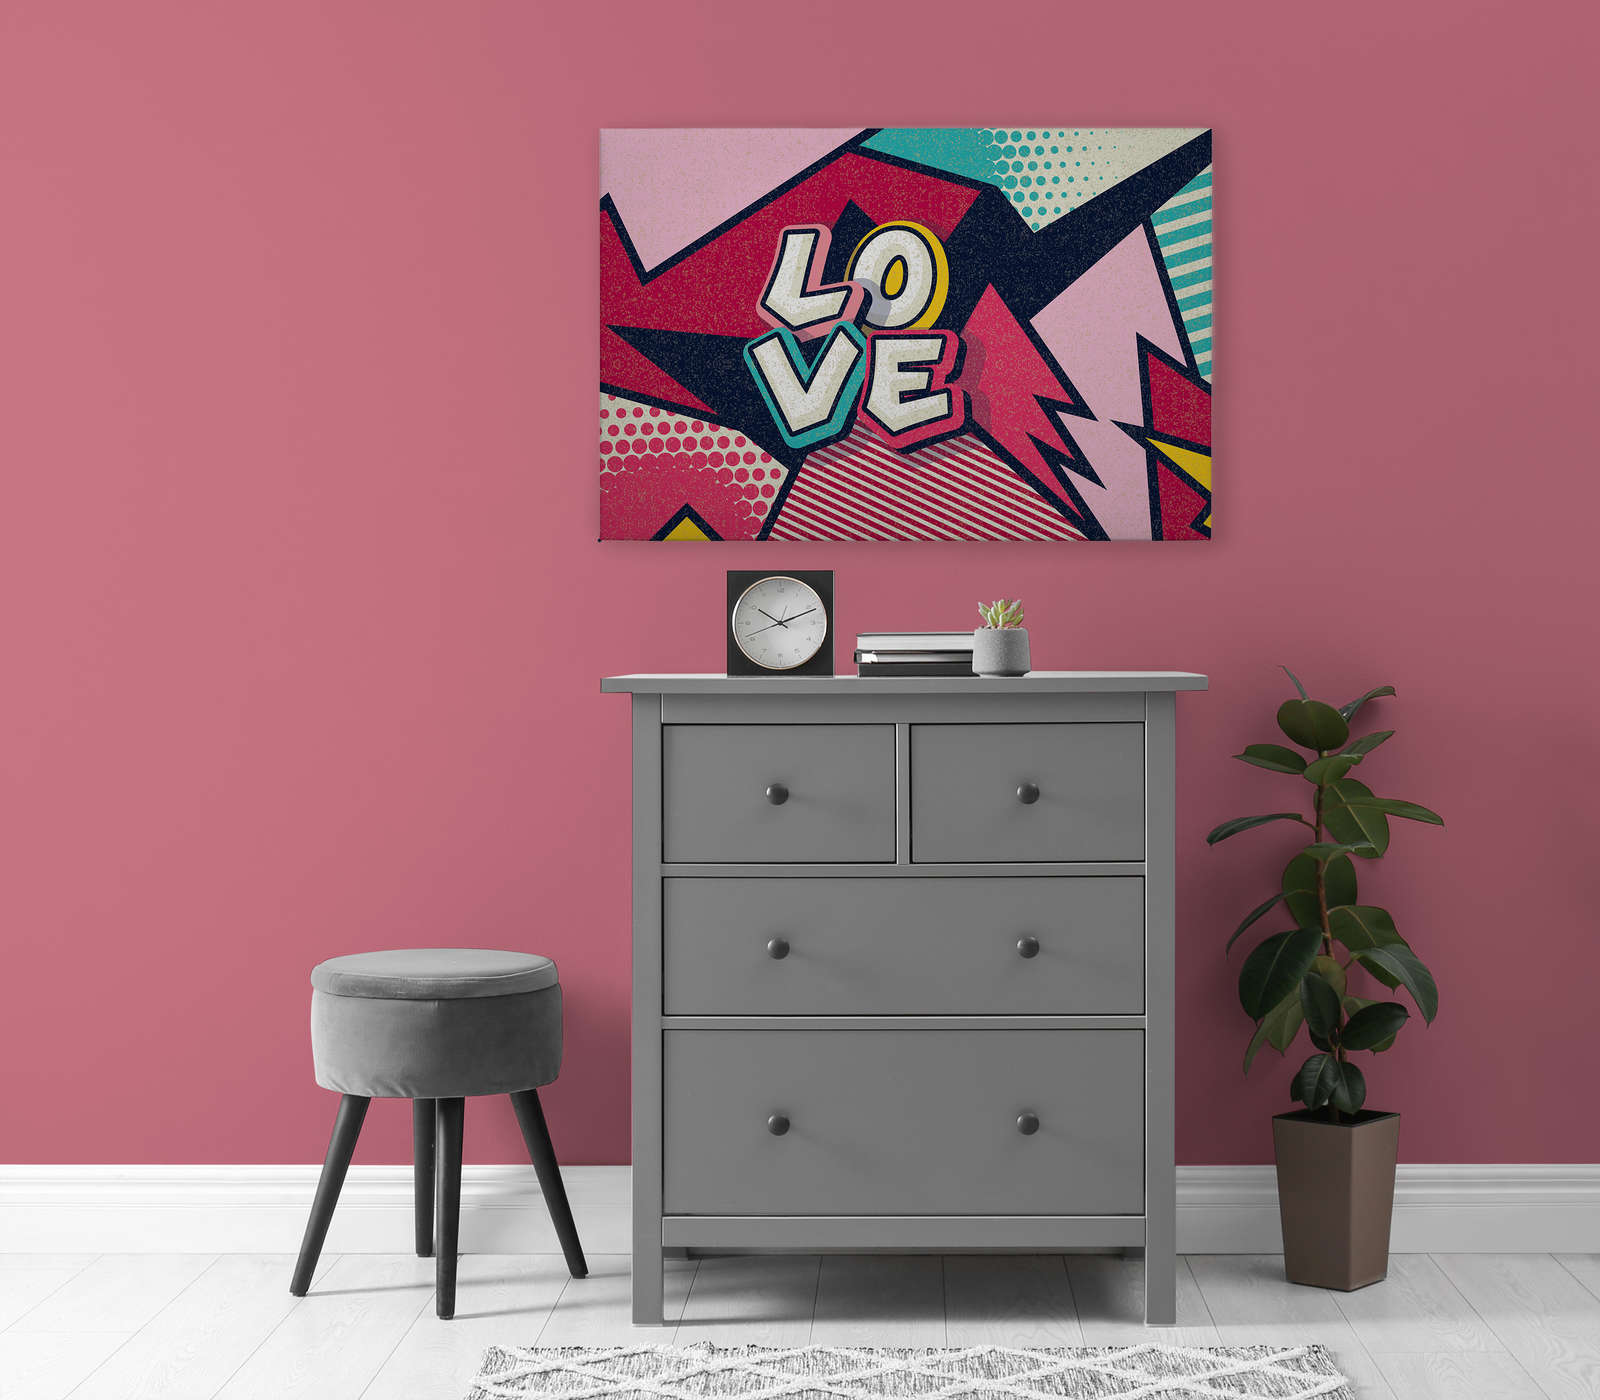             Pop Up Love Canvas Schilderij in komische stijl - 0,90 m x 0,60 m
        